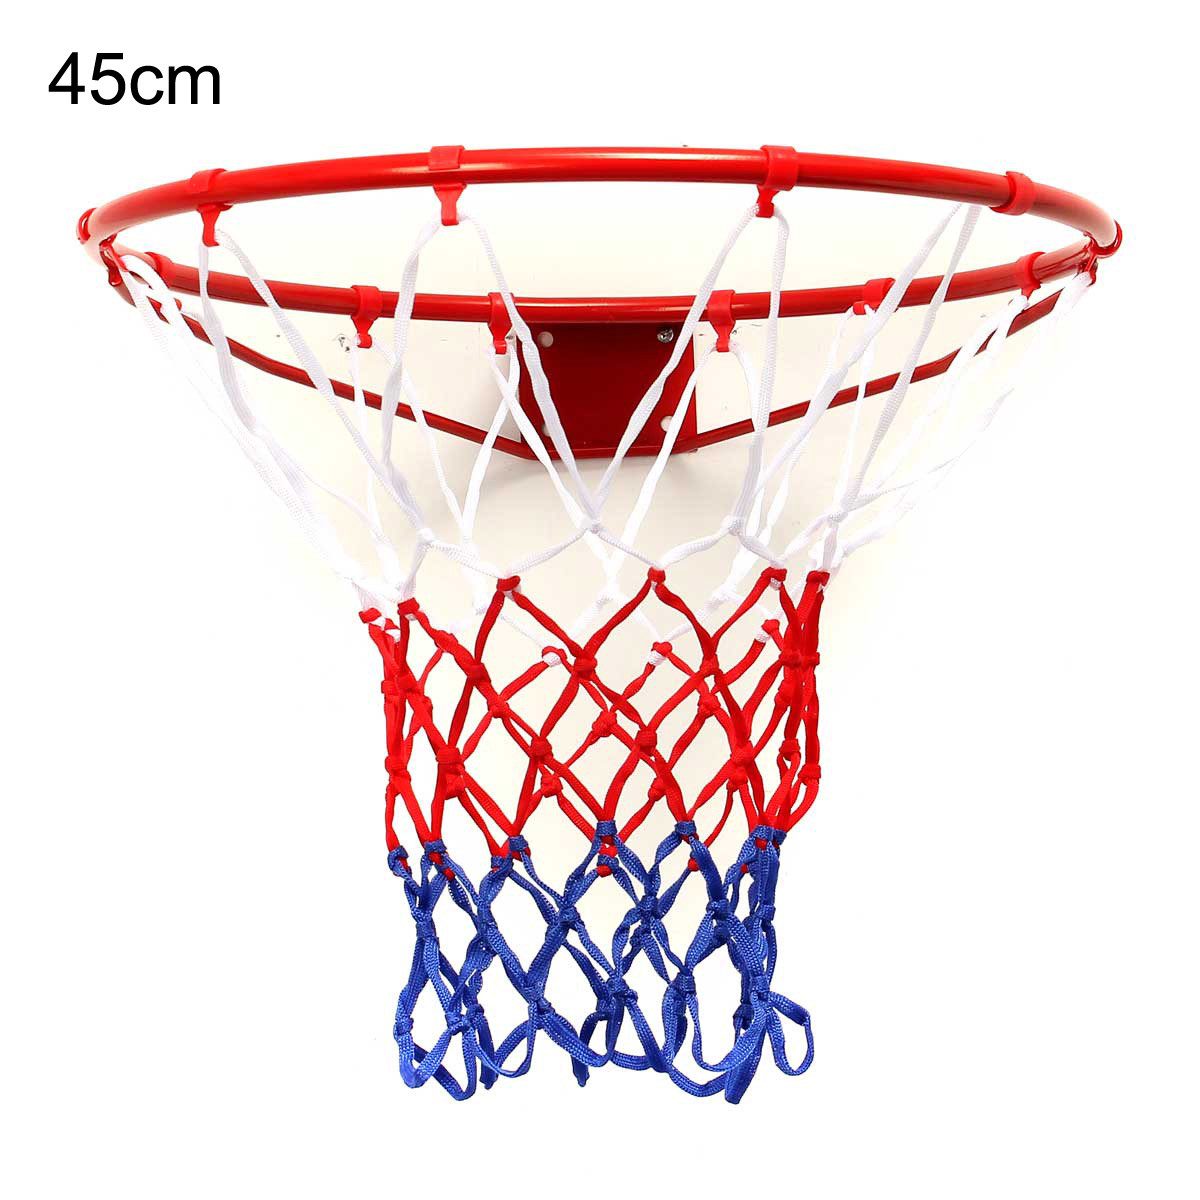 Wall-Mounted-Hanging-Basketball-Goal-Hoop-Rim-Metal-Netting-1040840-7